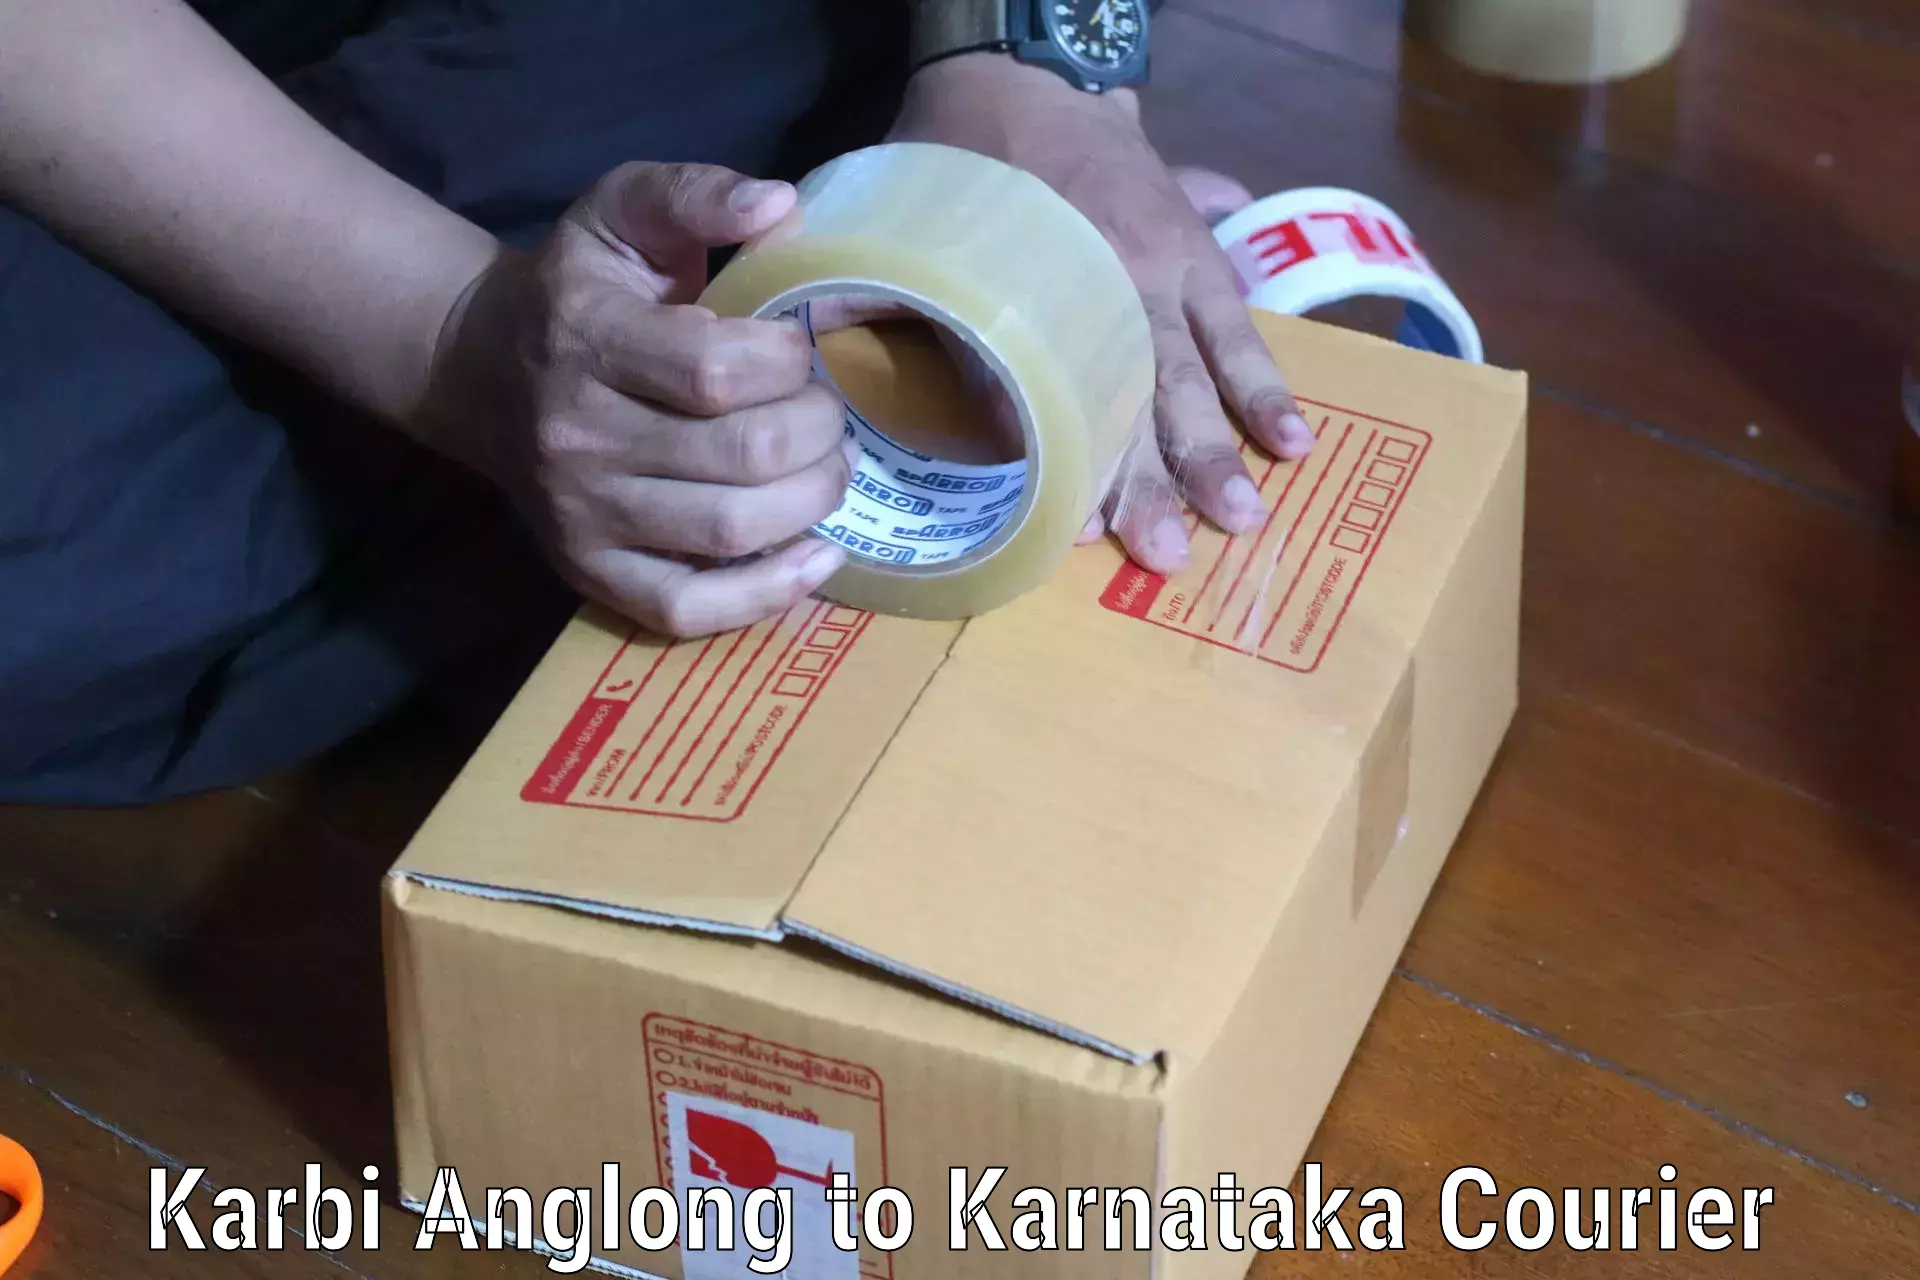 Global shipping solutions Karbi Anglong to Kotturu